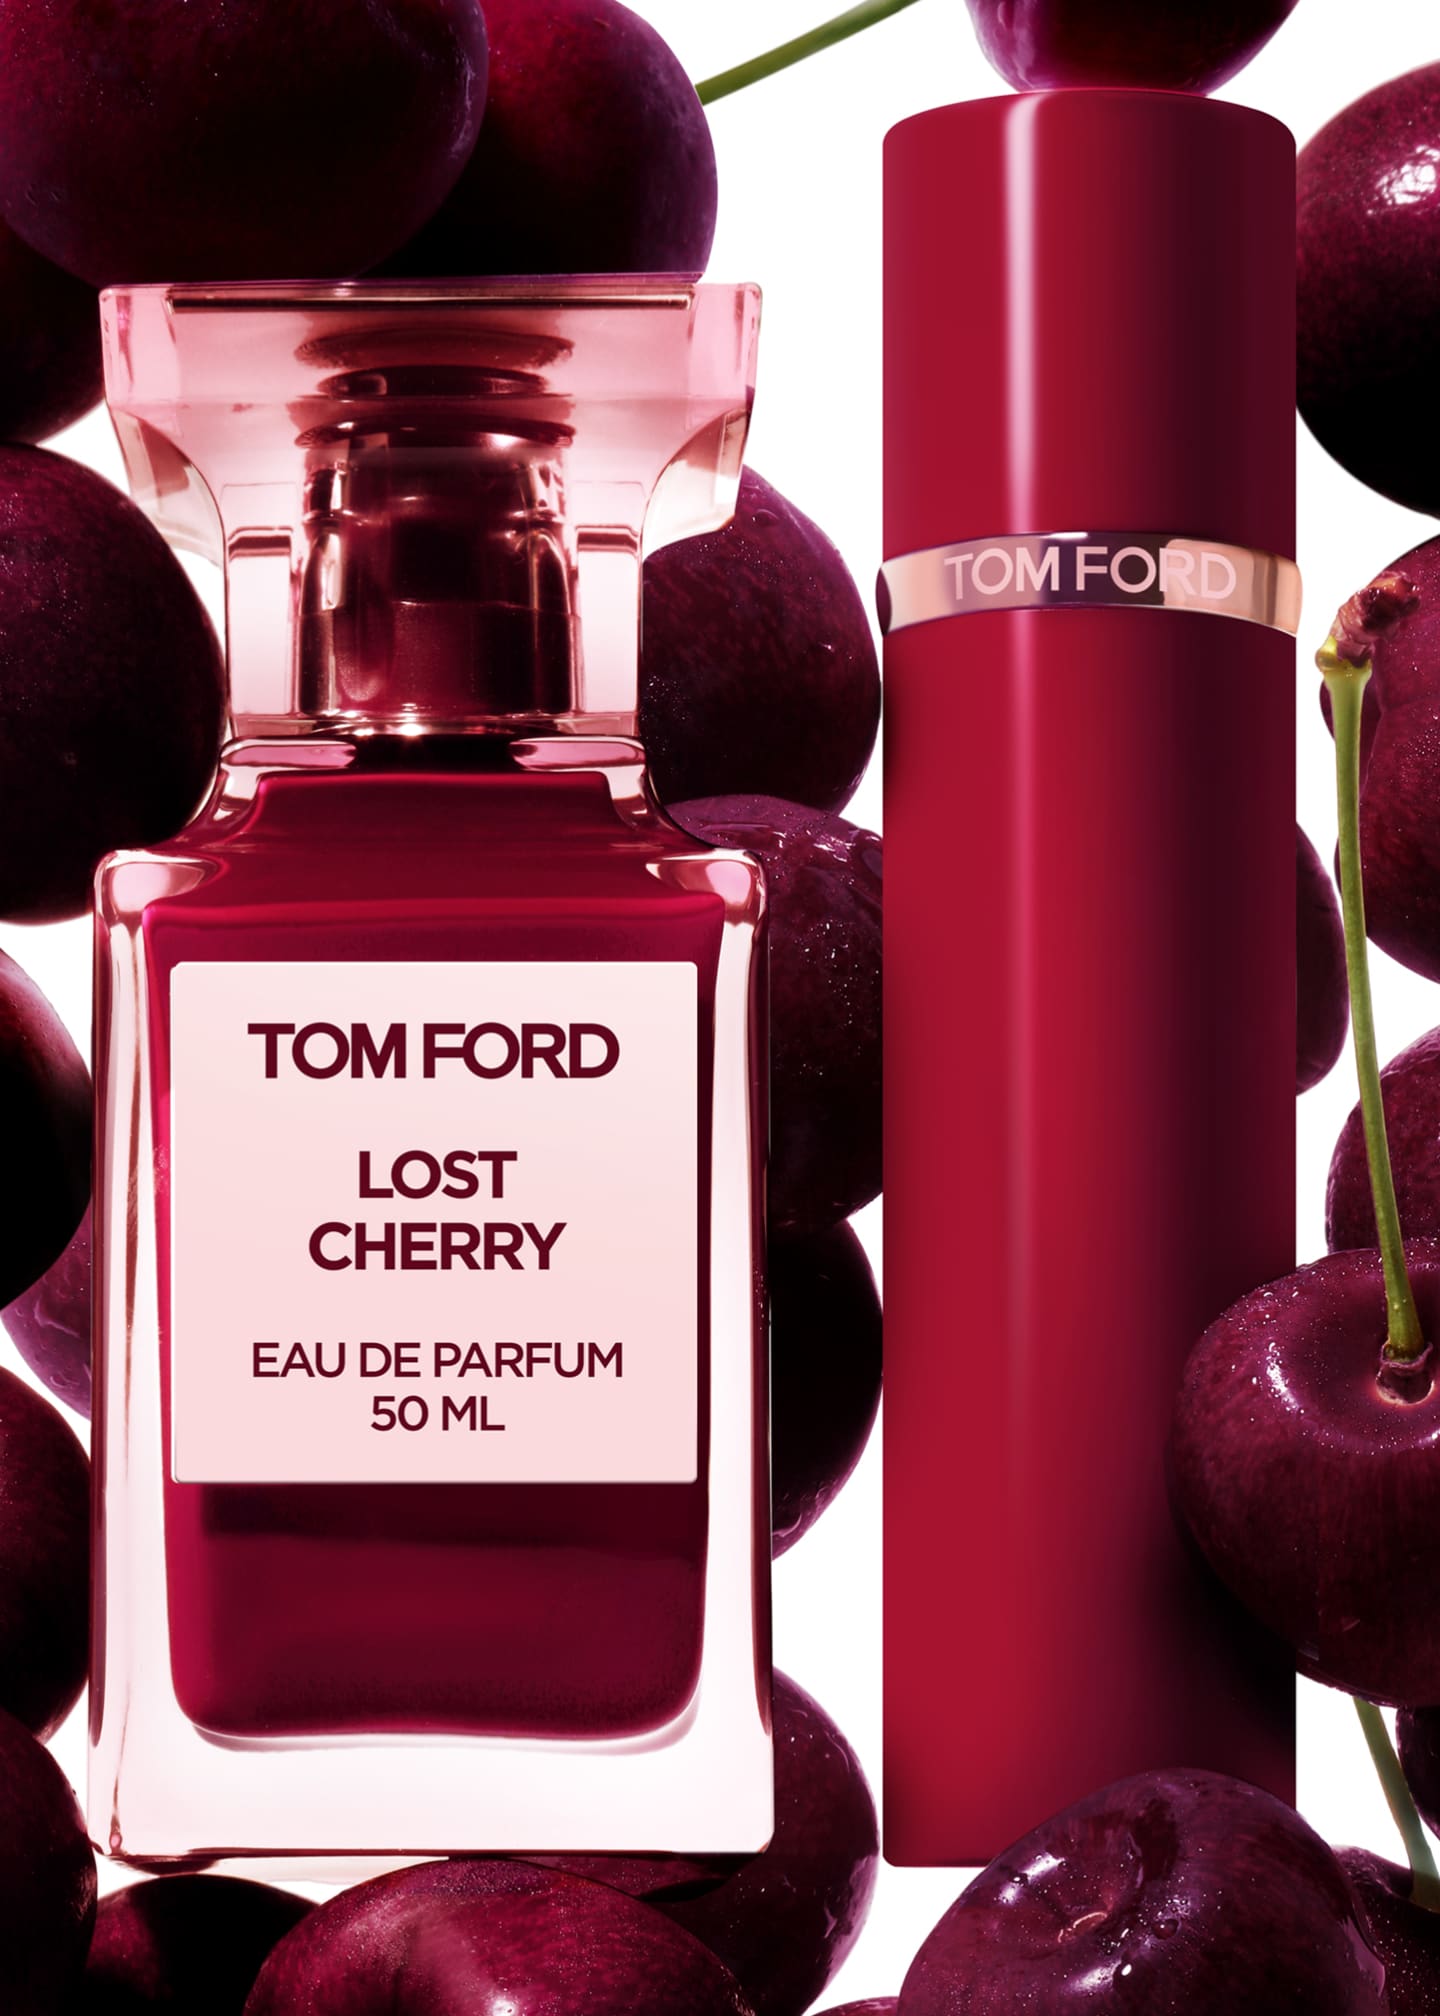 TOM FORD Lost Cherry Eau de Parfum Fragrance, 1.7 oz Image 3 of 3